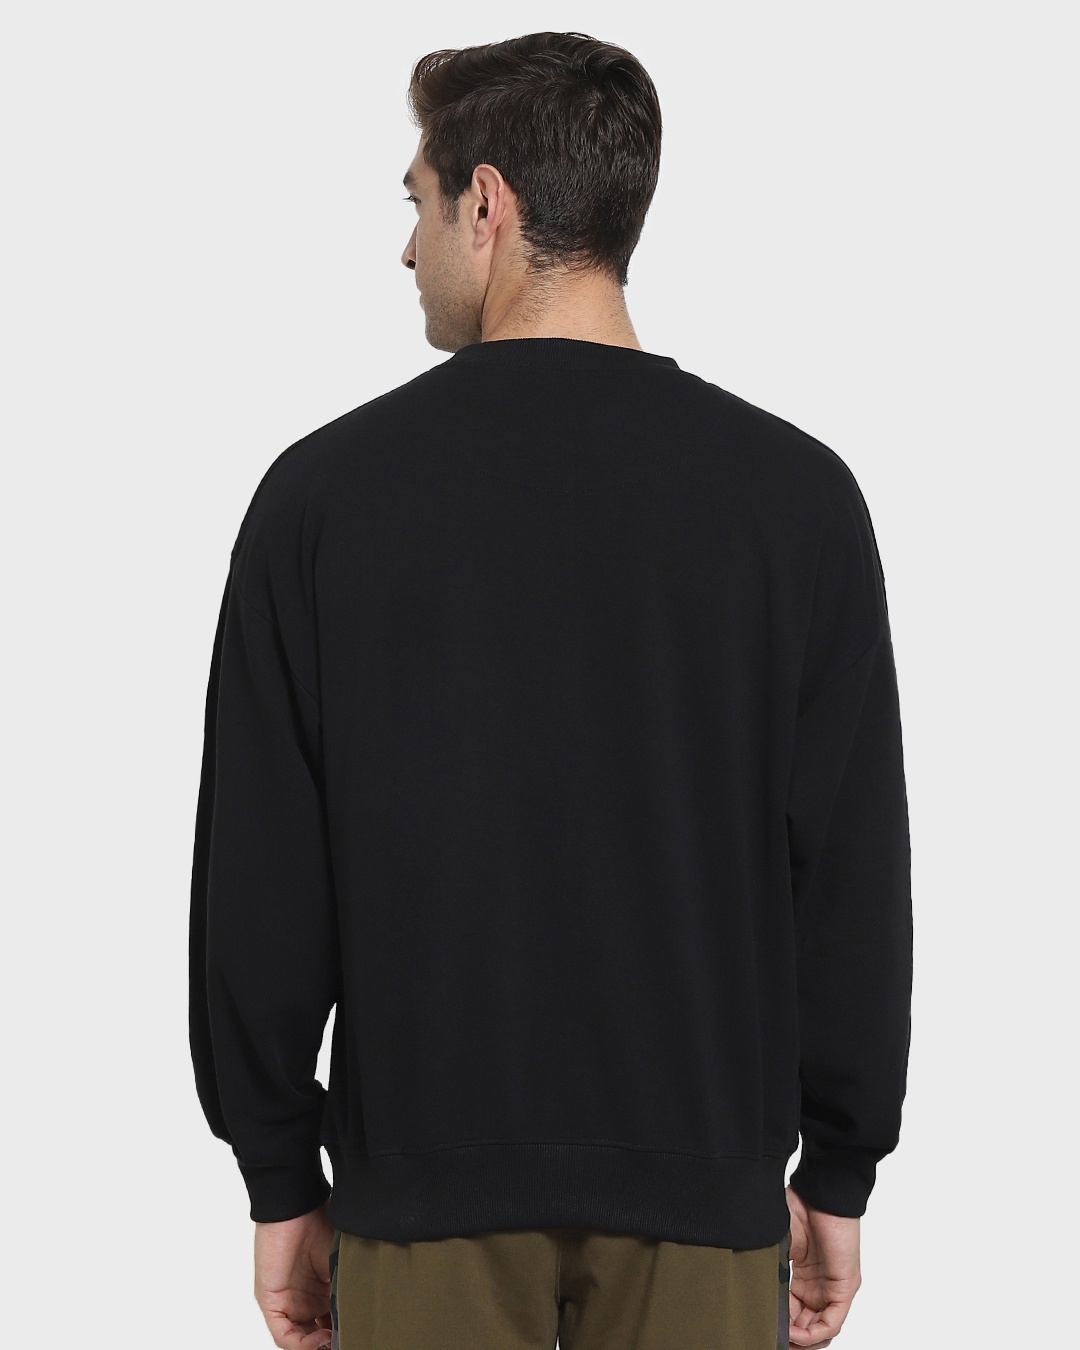 Shop Black Relaxed Fit Crew Neck Sweatshirt-Design